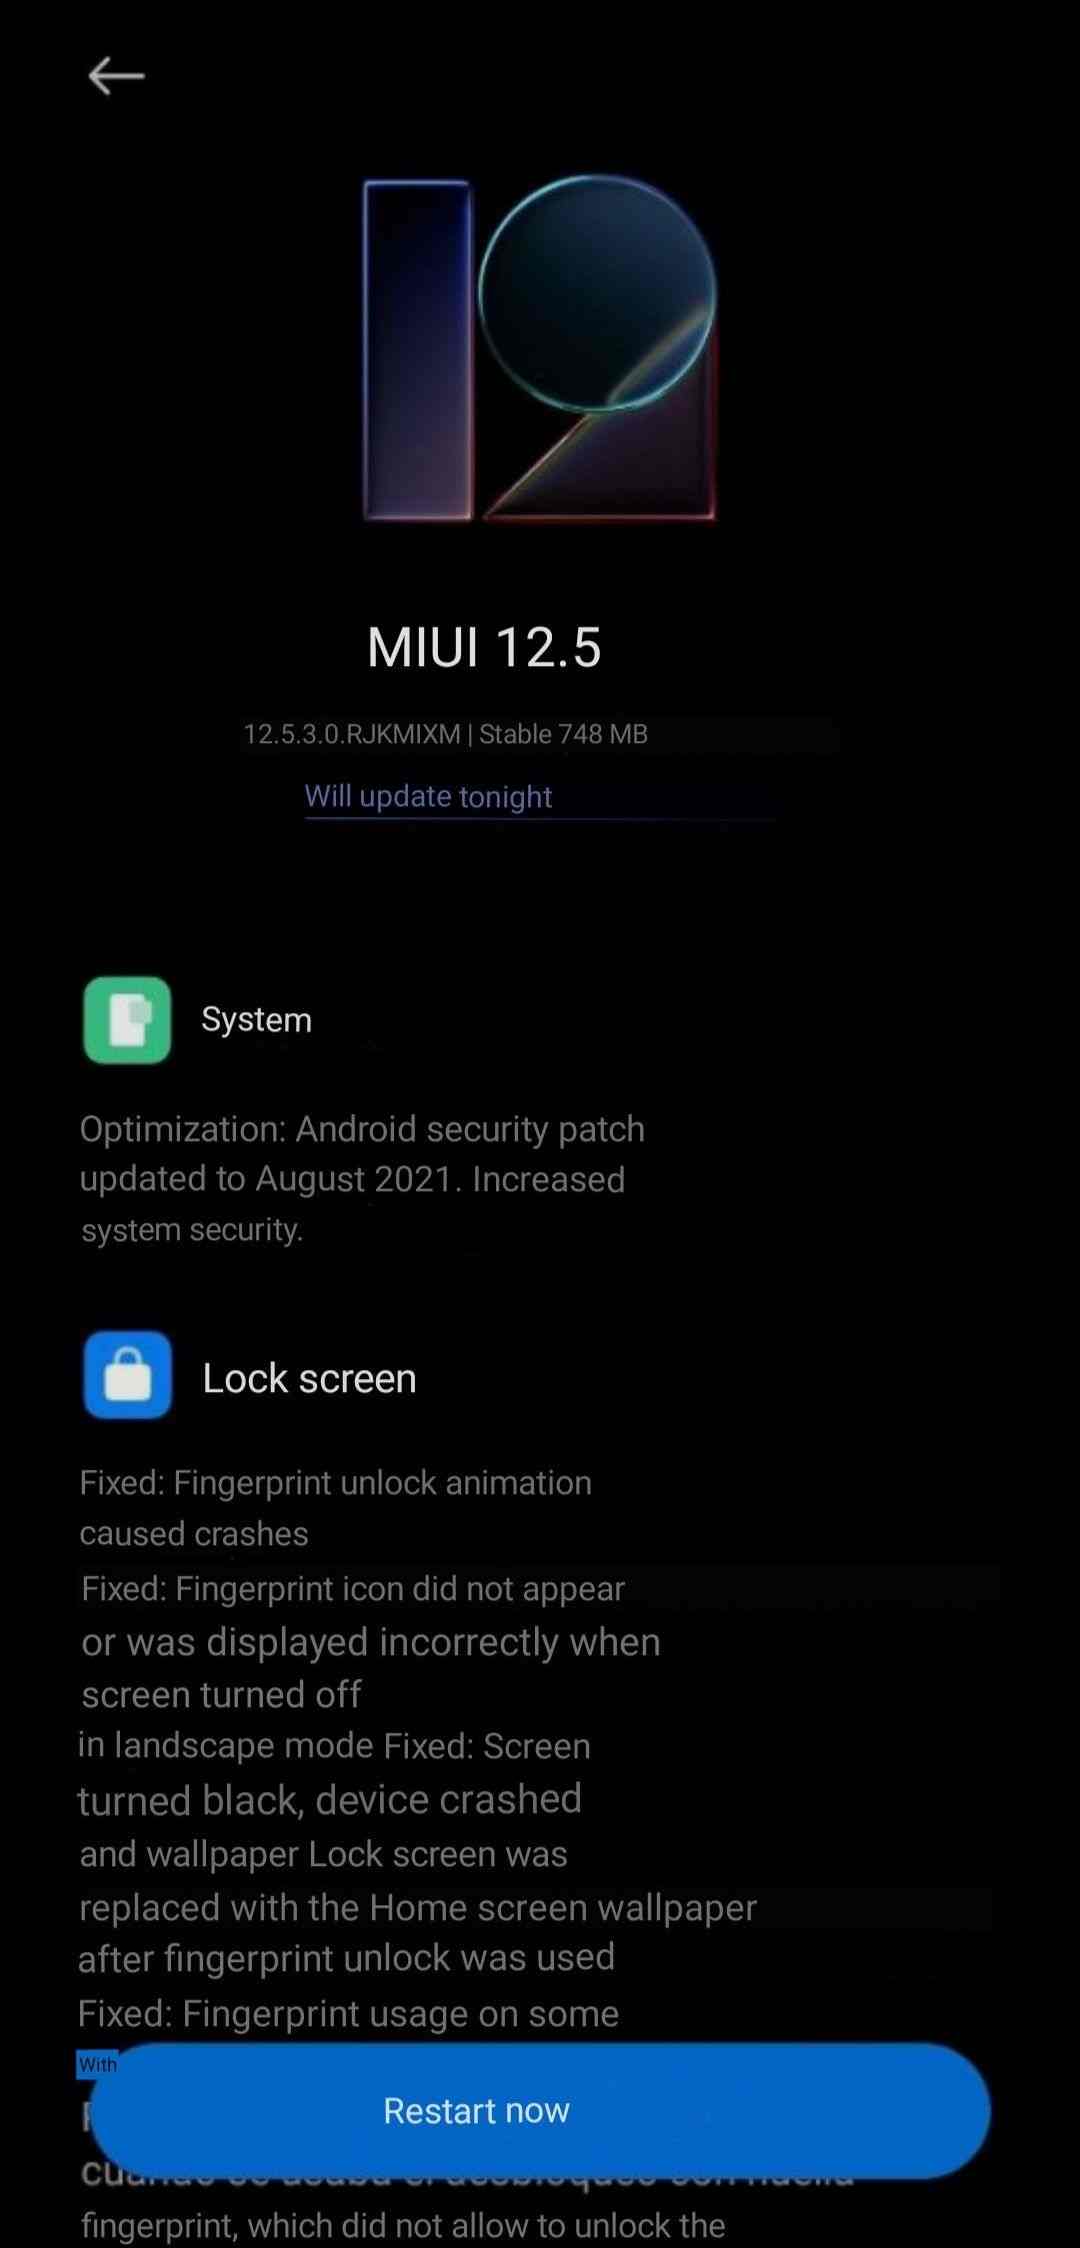 Enhanced edition of MIUI 12.5